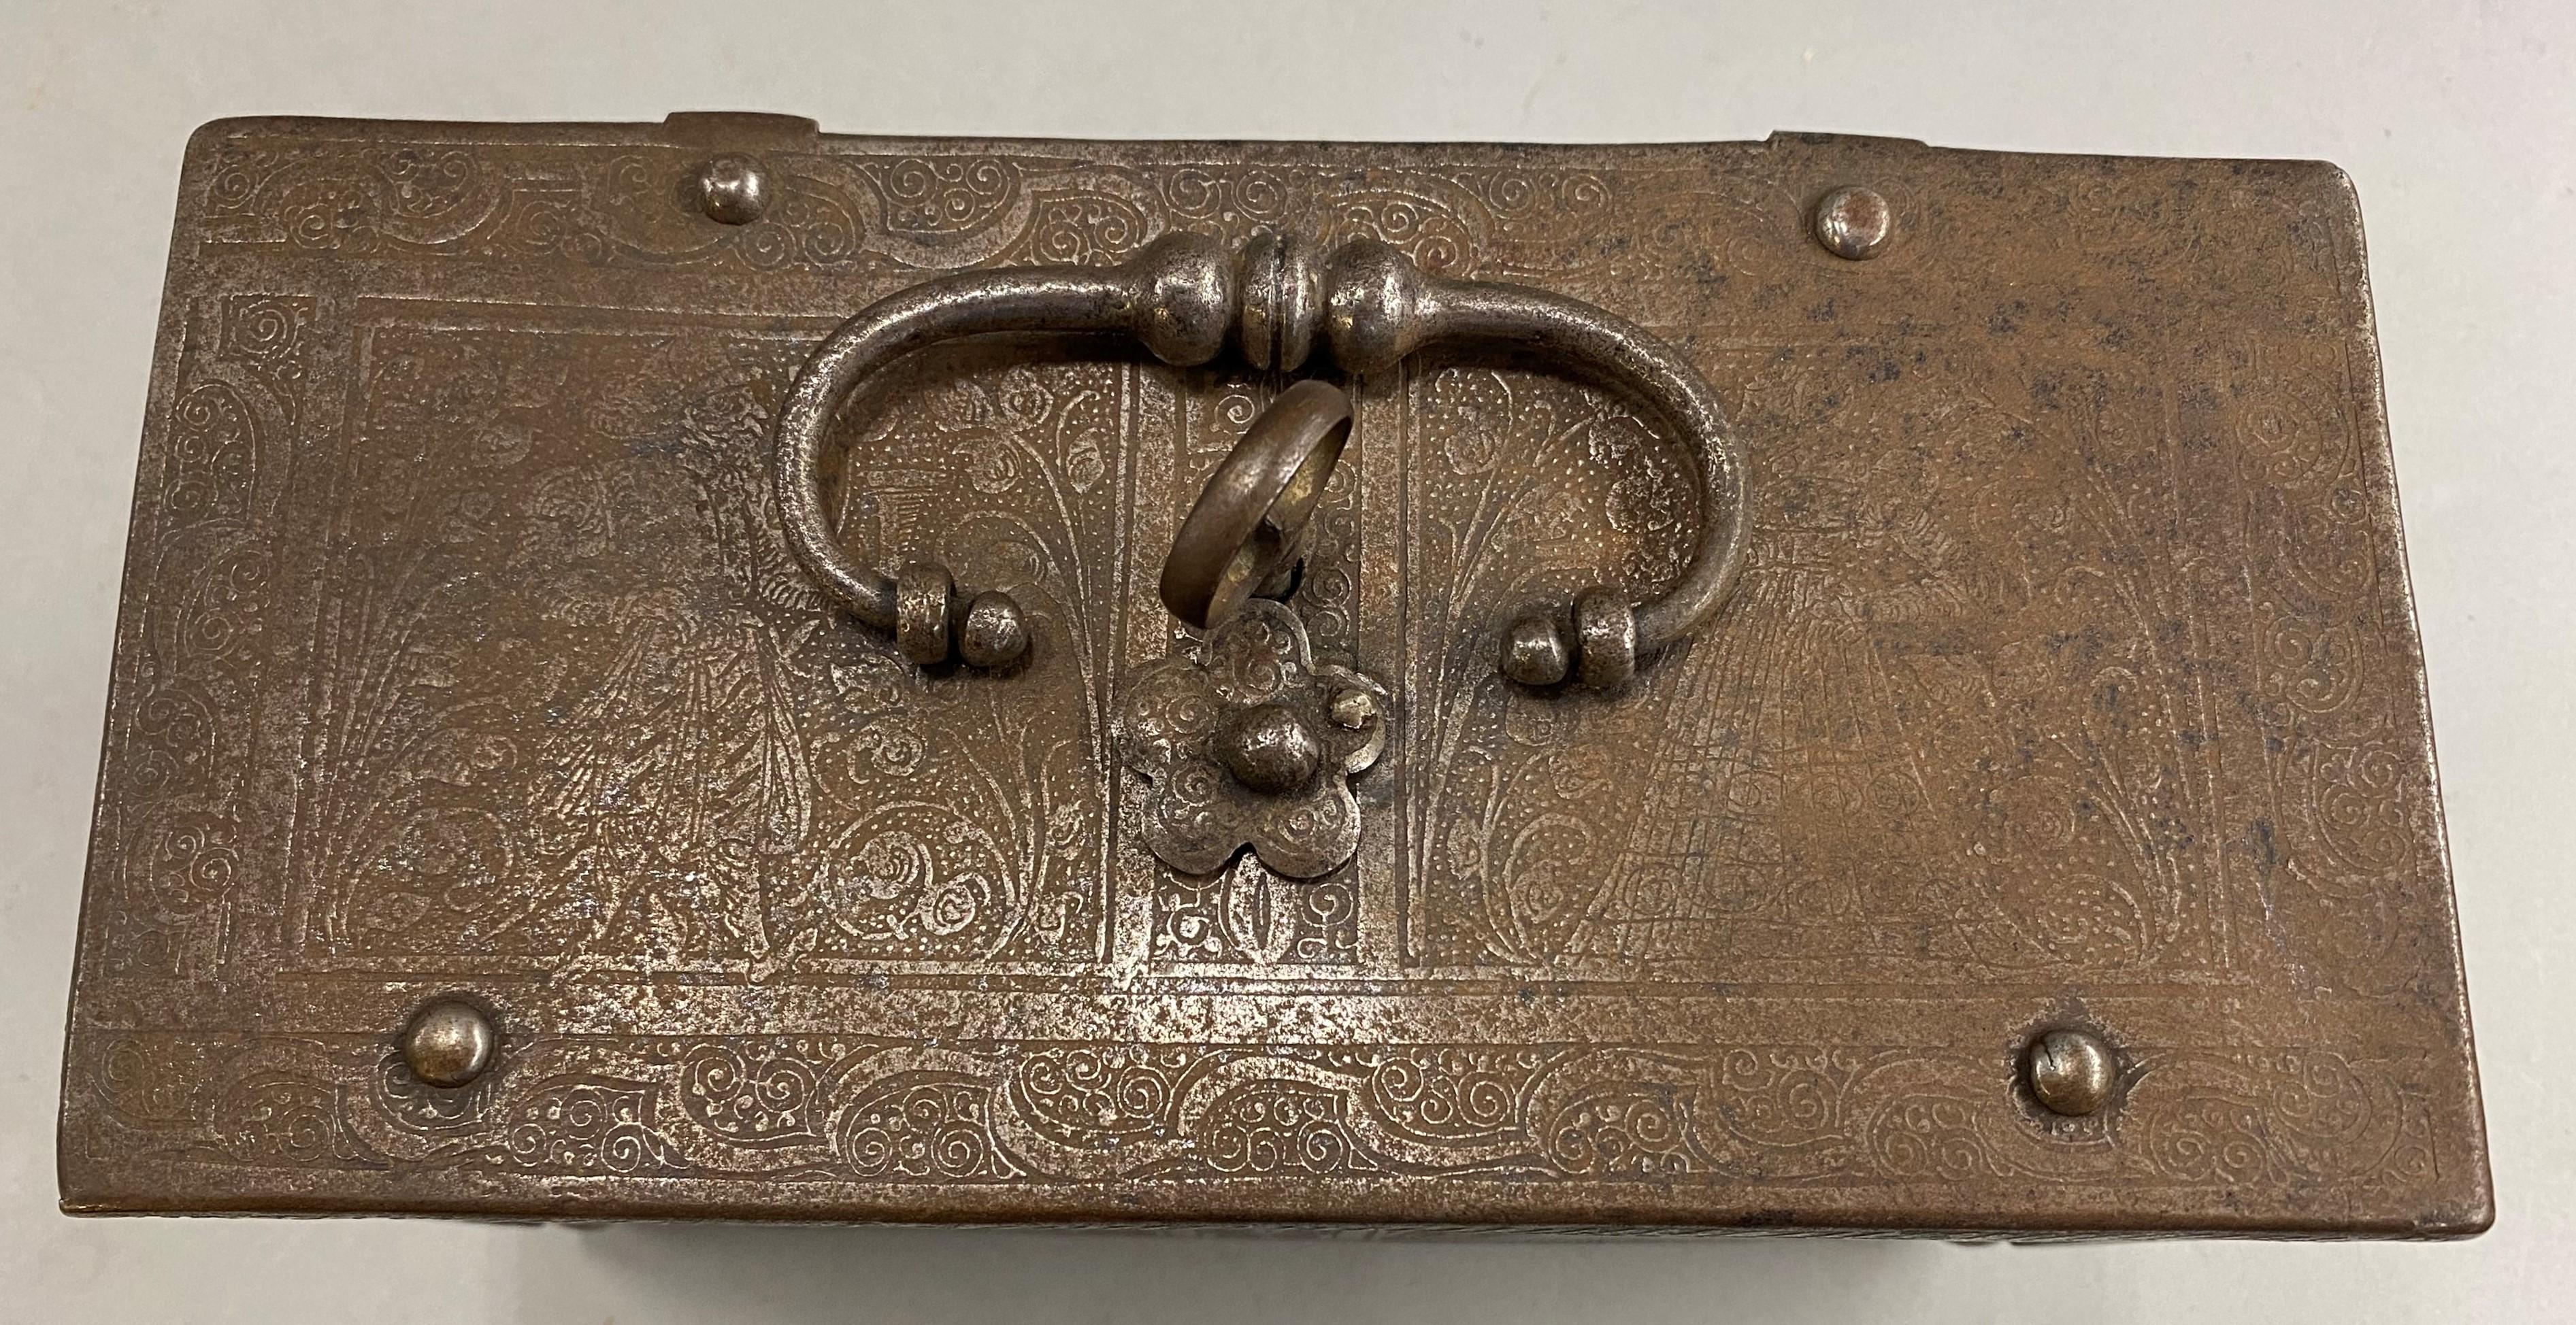 Stahlgravierte Nürnberger Sparbüchse oder Geldkassette um 1600 (Anfang des 17. Jahrhunderts) im Angebot